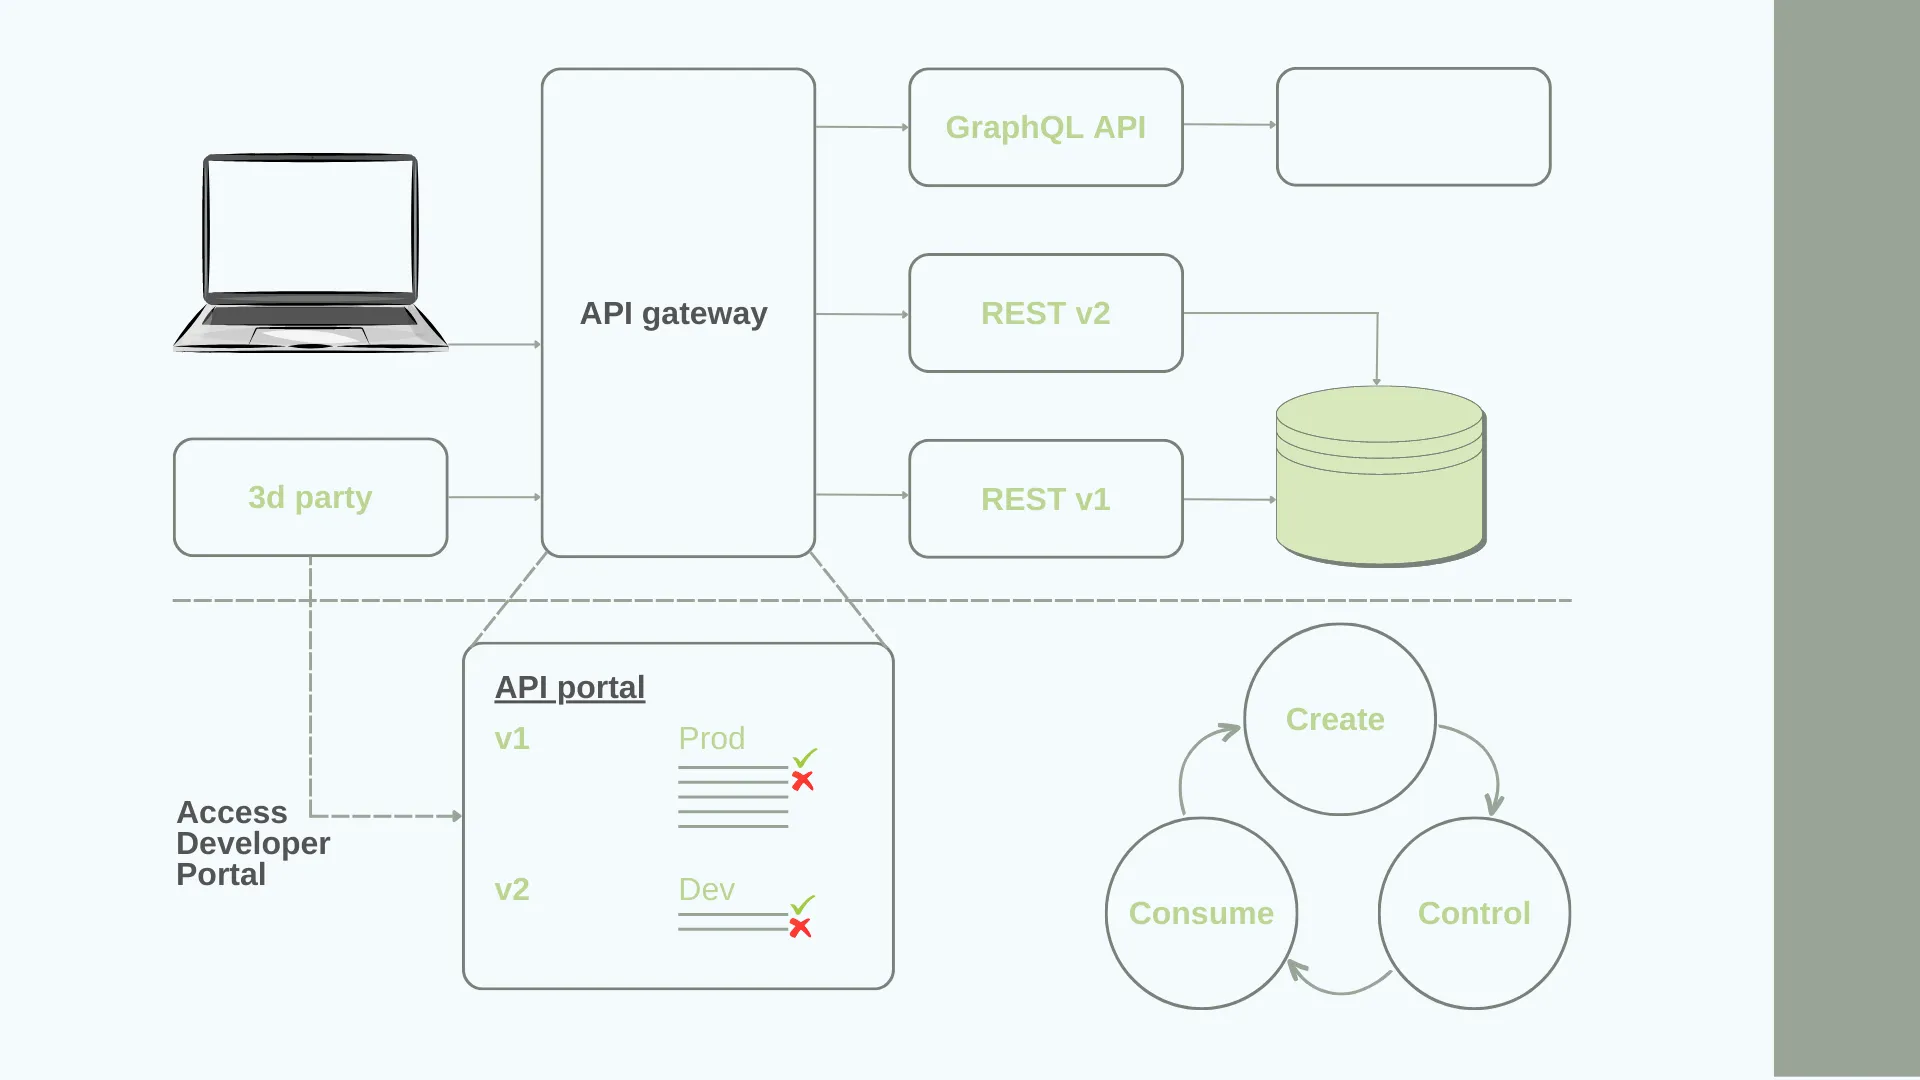 API lifecycle management integrates with an API gateway